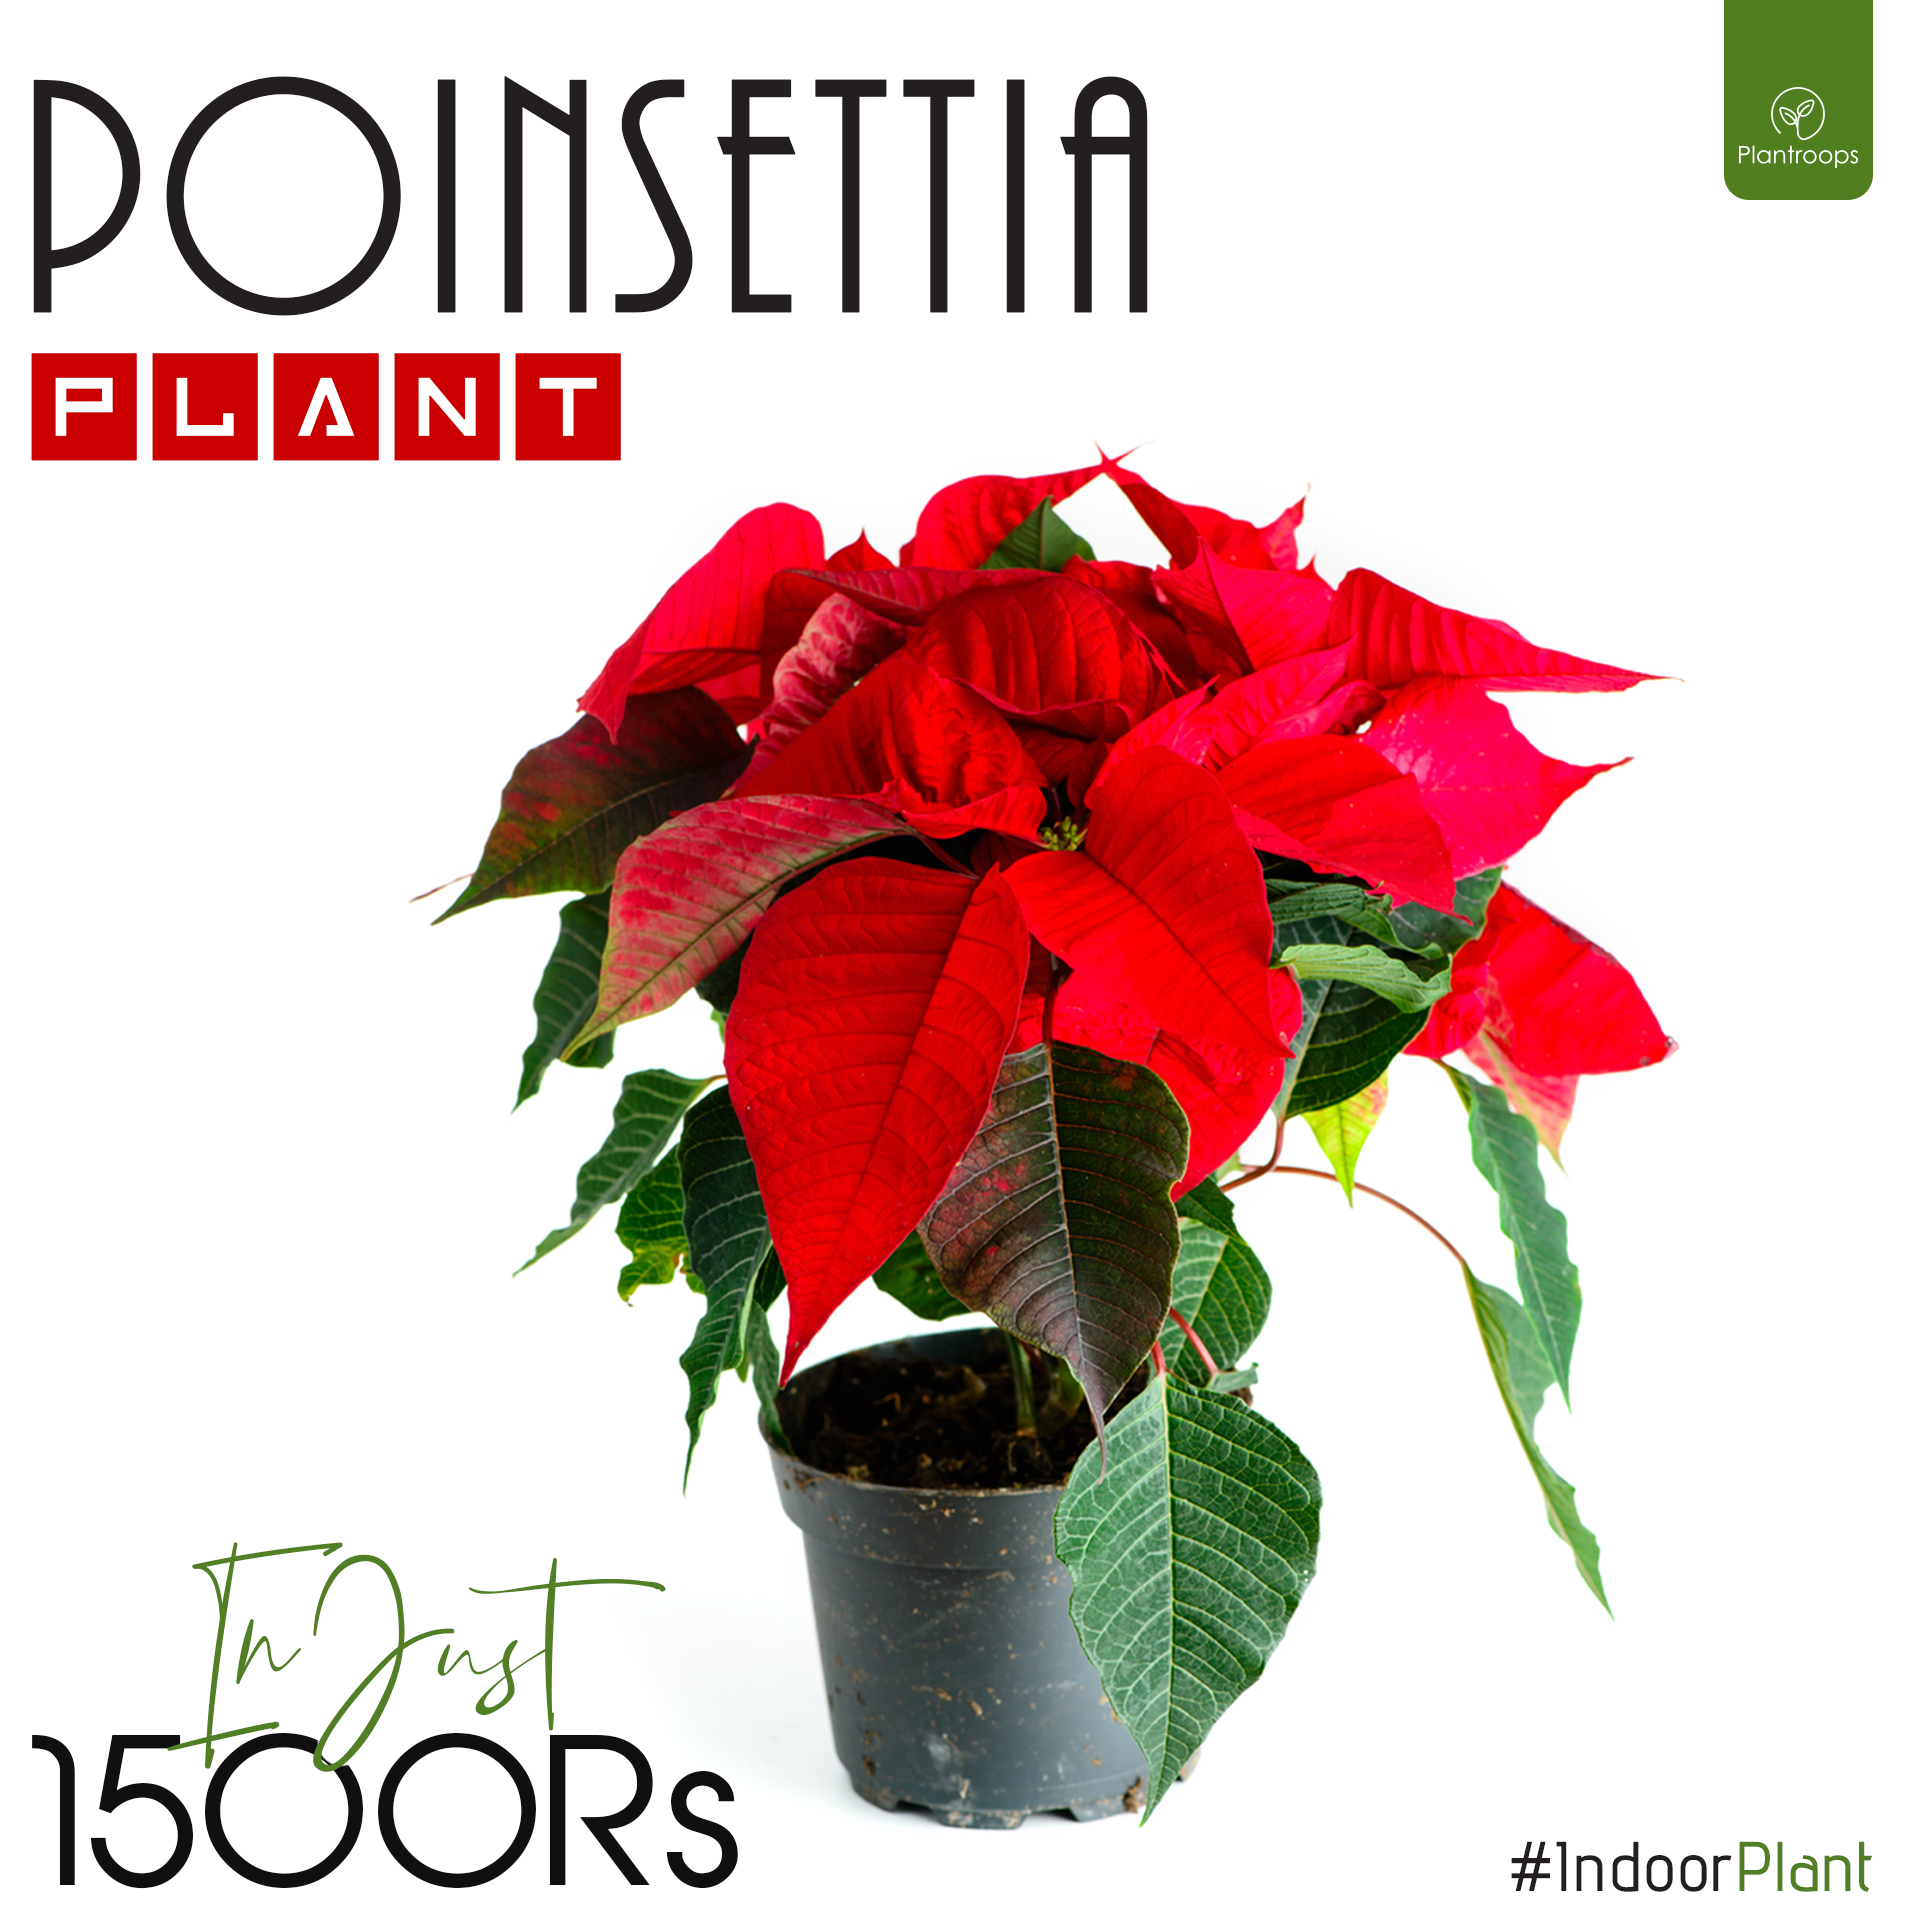 PIONSETTIA PLANT